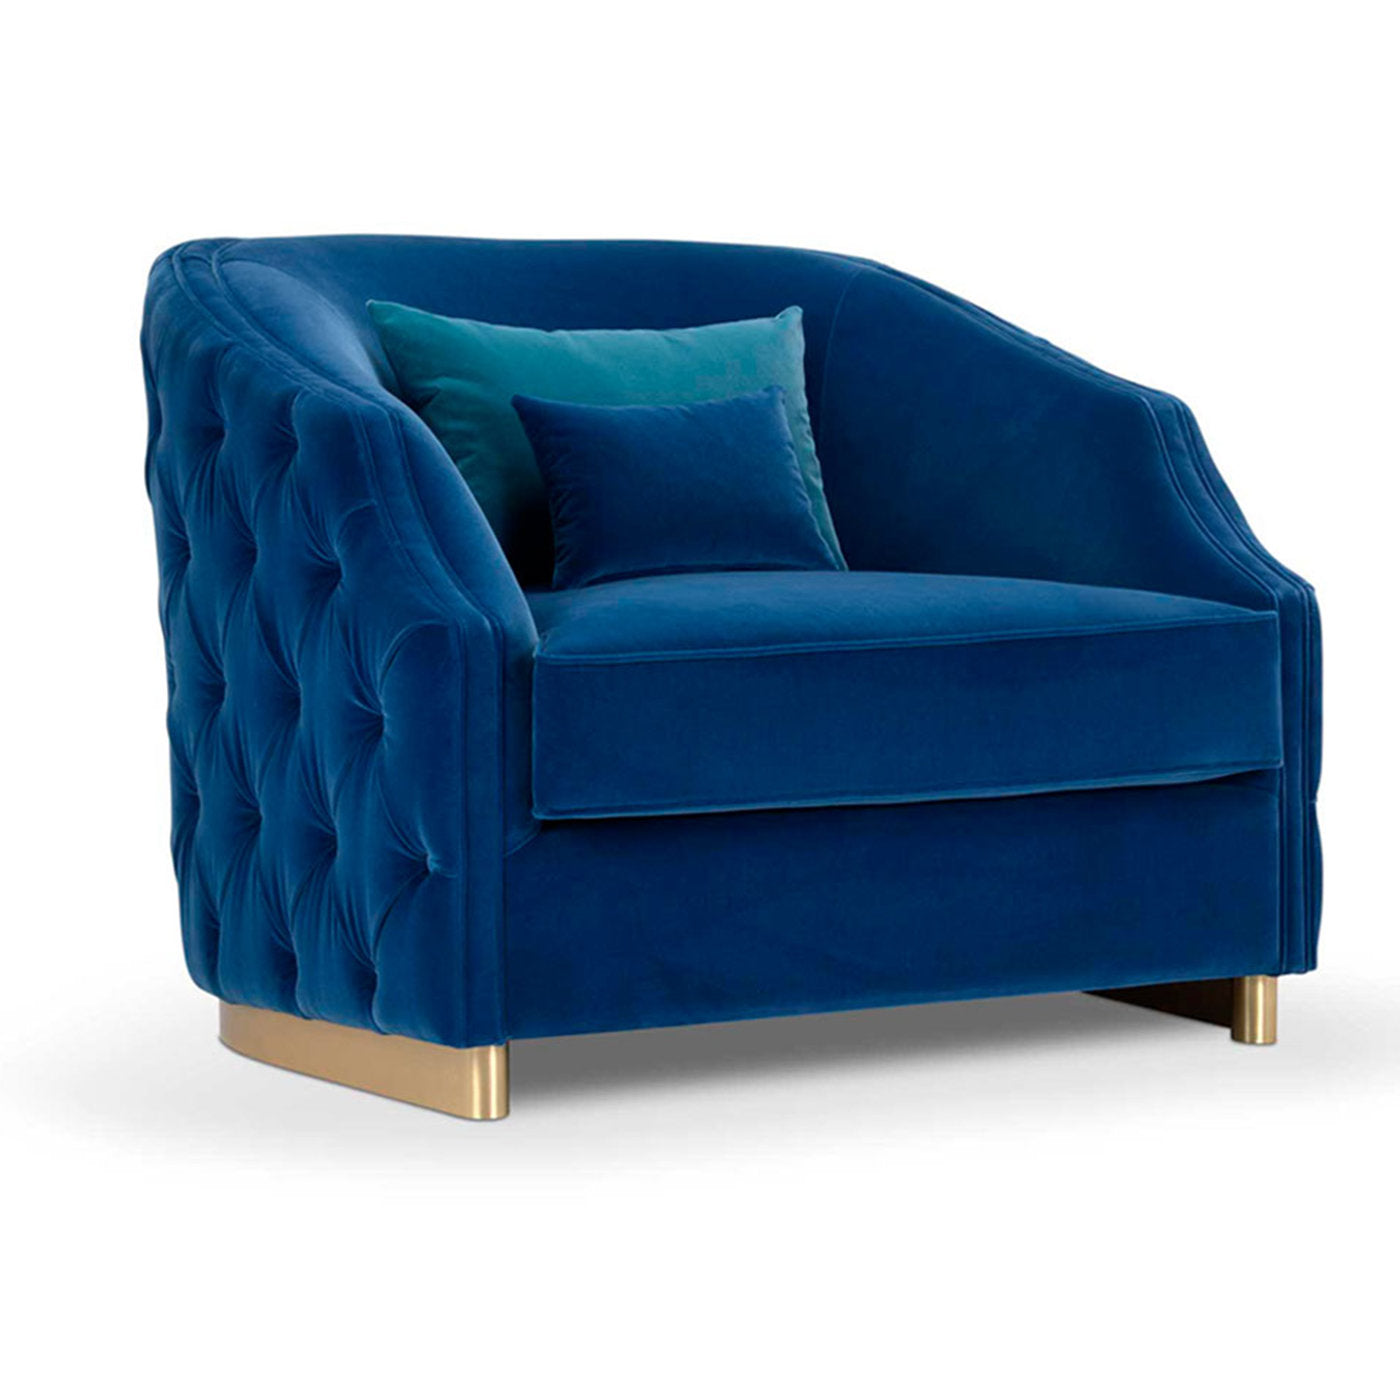 Cleio Large Blue Armchair - Alternative view 1